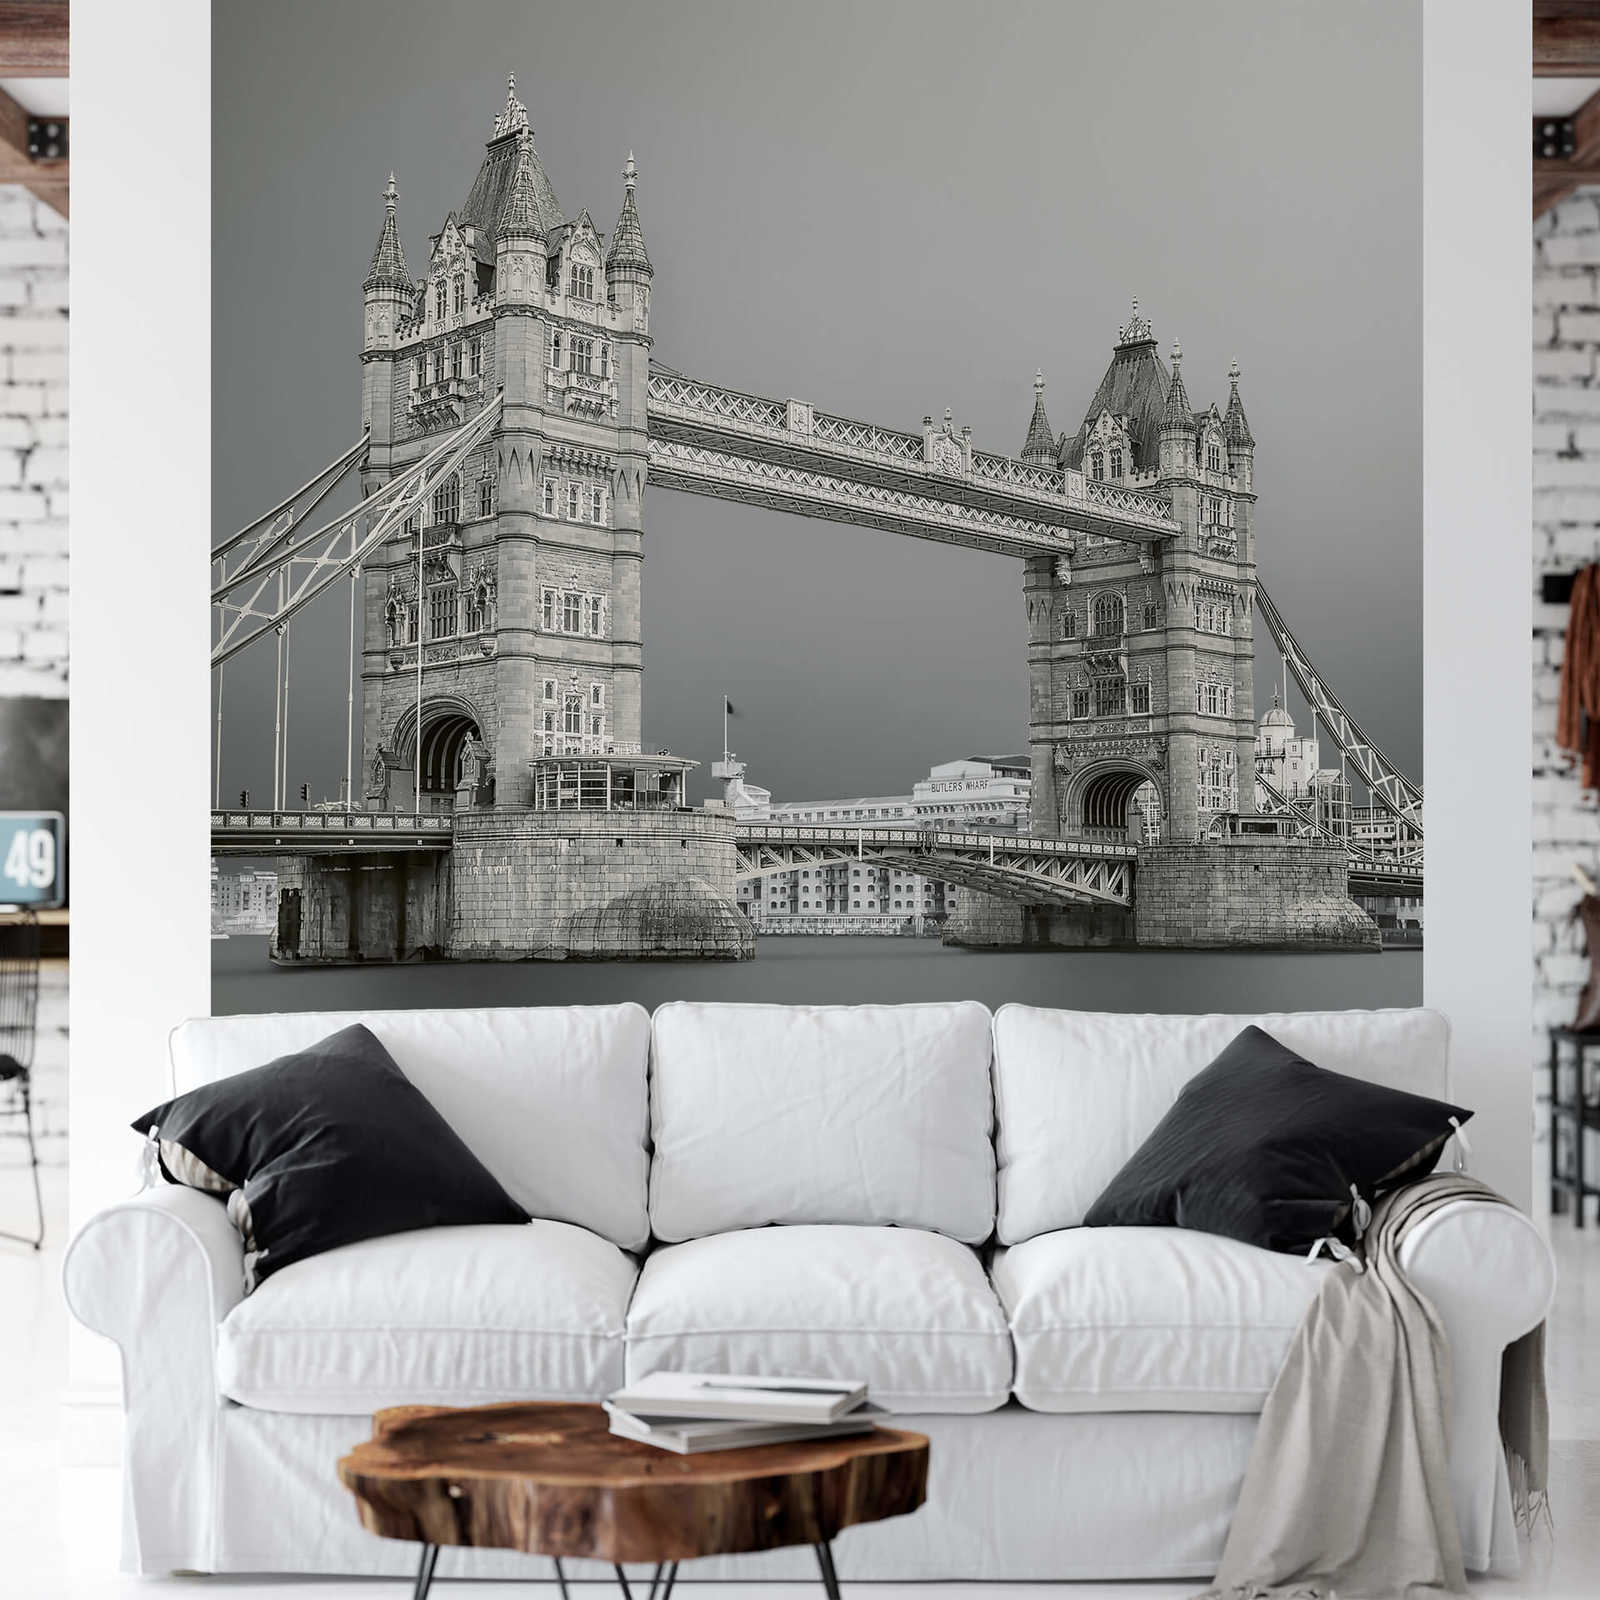             Fotomurali London Tower Bridge - Grigio, bianco, nero
        